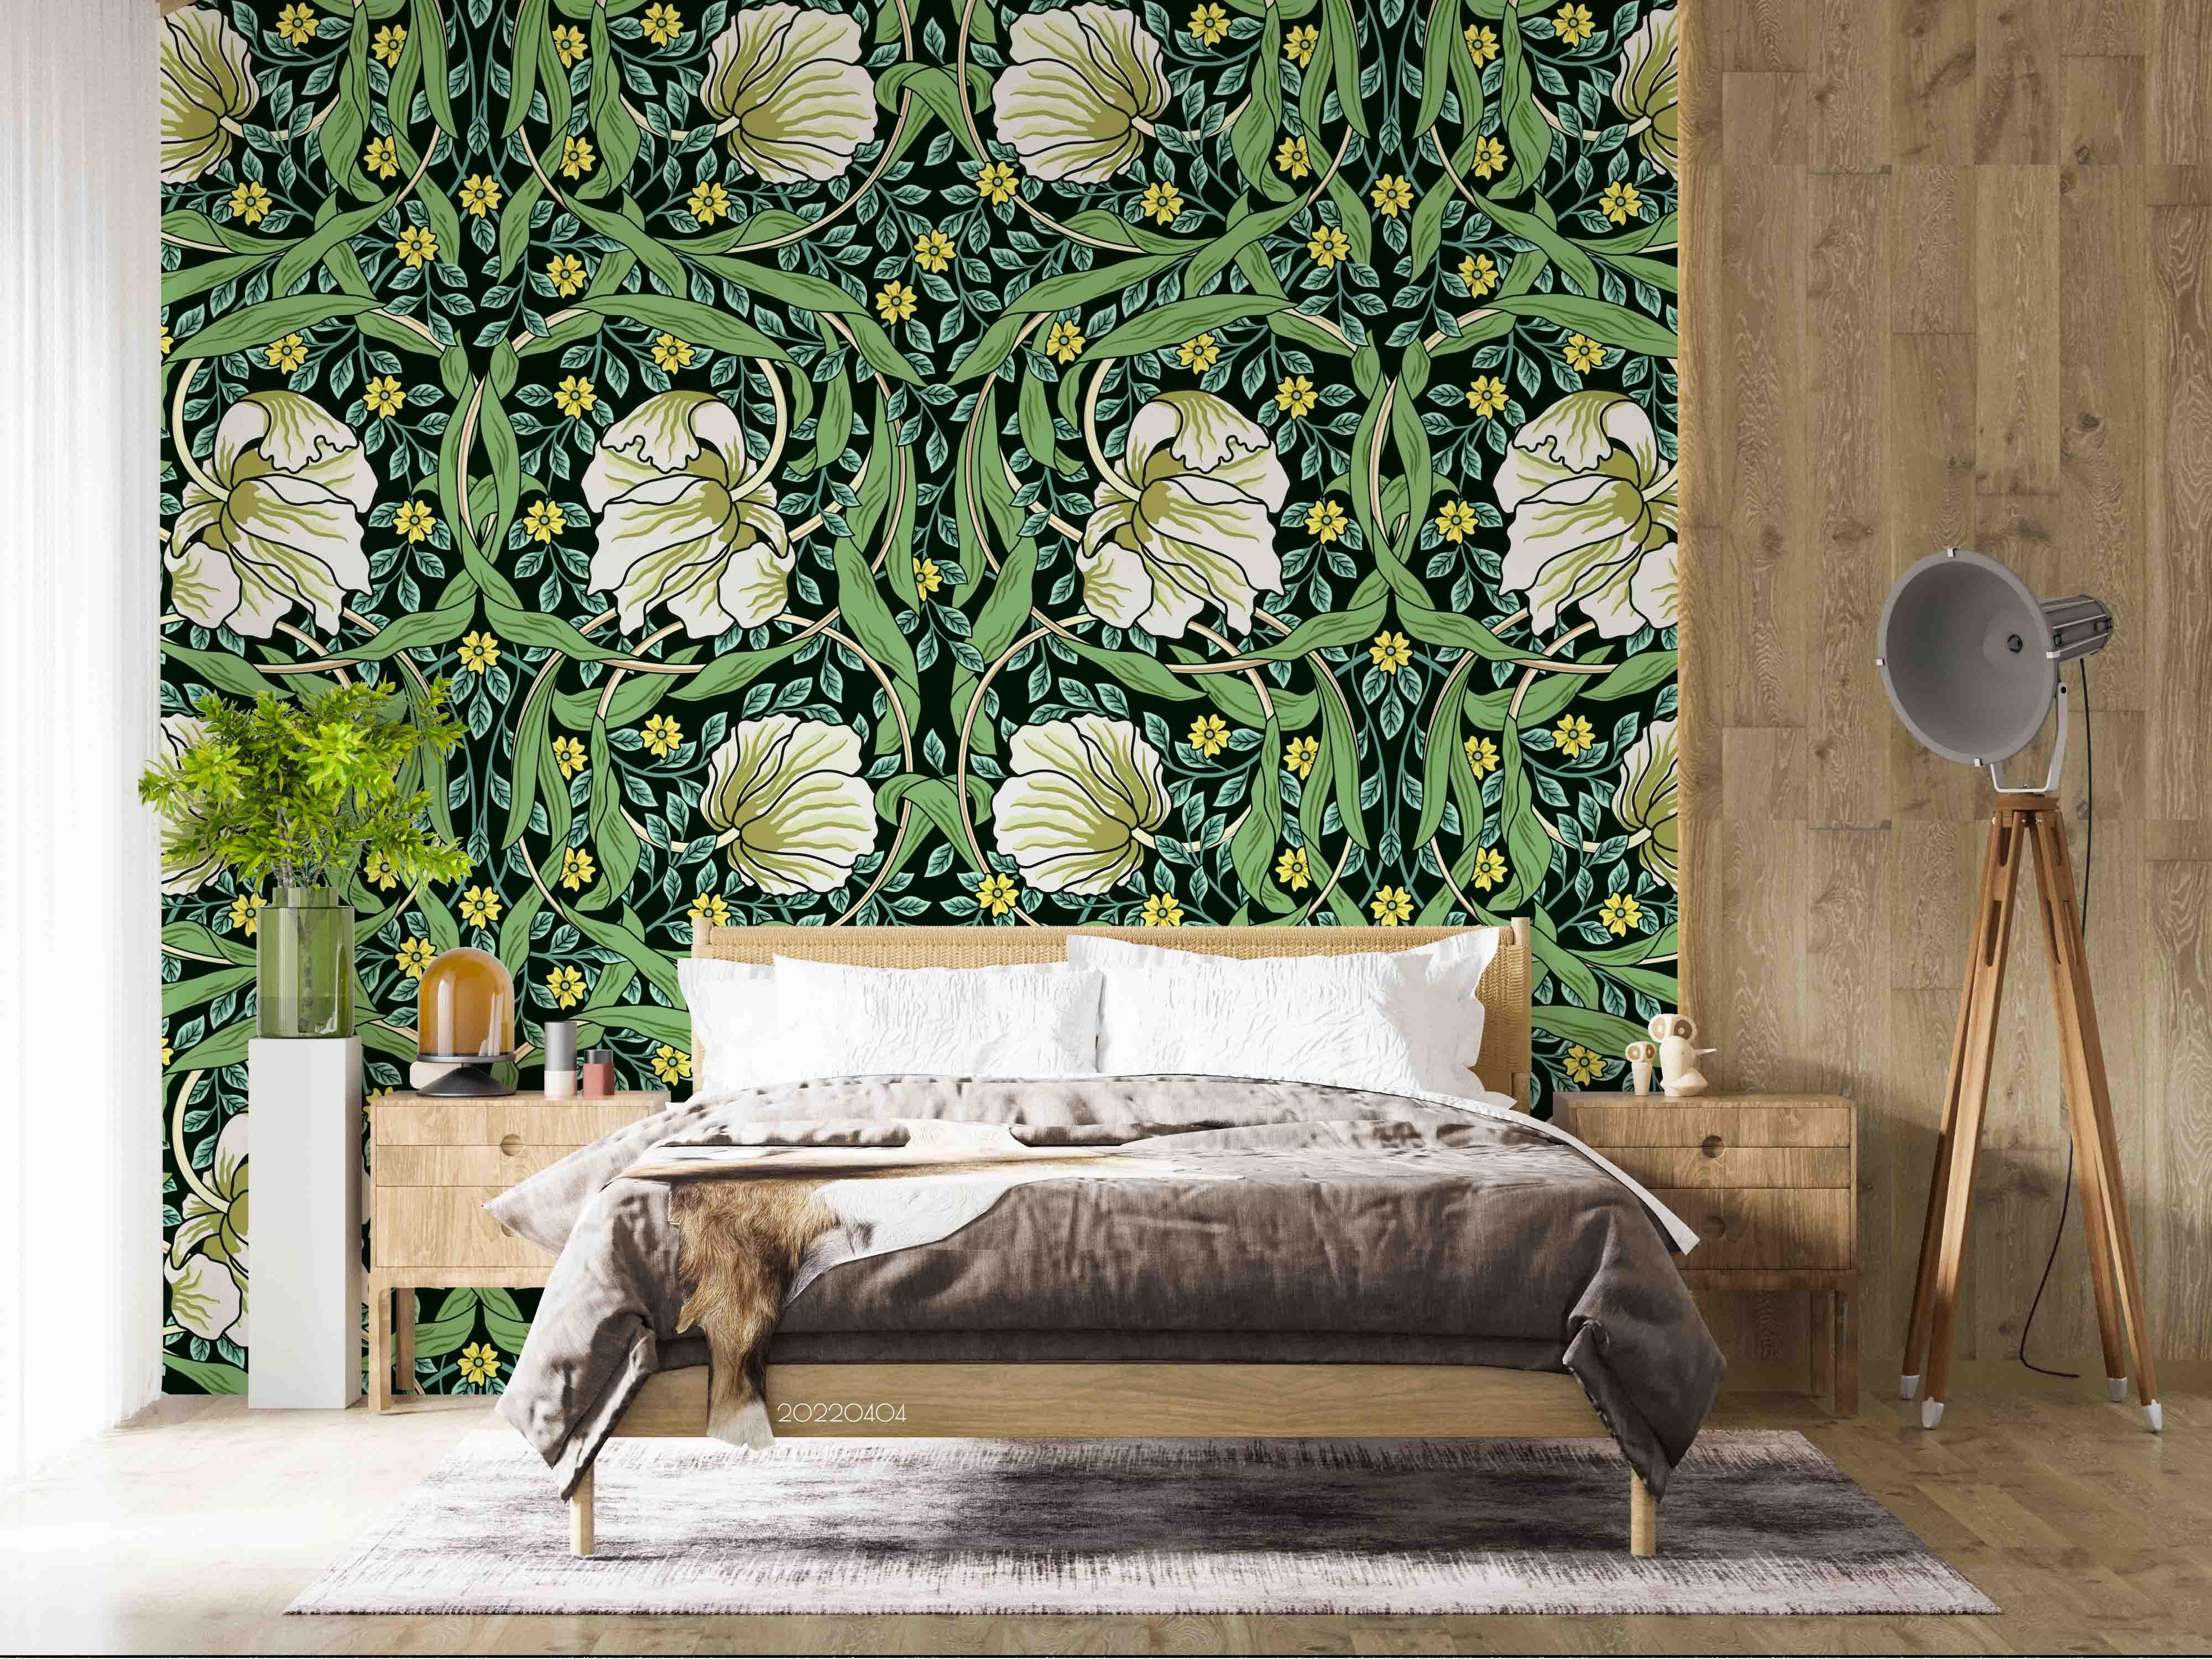 3D Vintage Plant Green Leaf Floral Wall Mural Wallpaper GD 3987- Jess Art Decoration